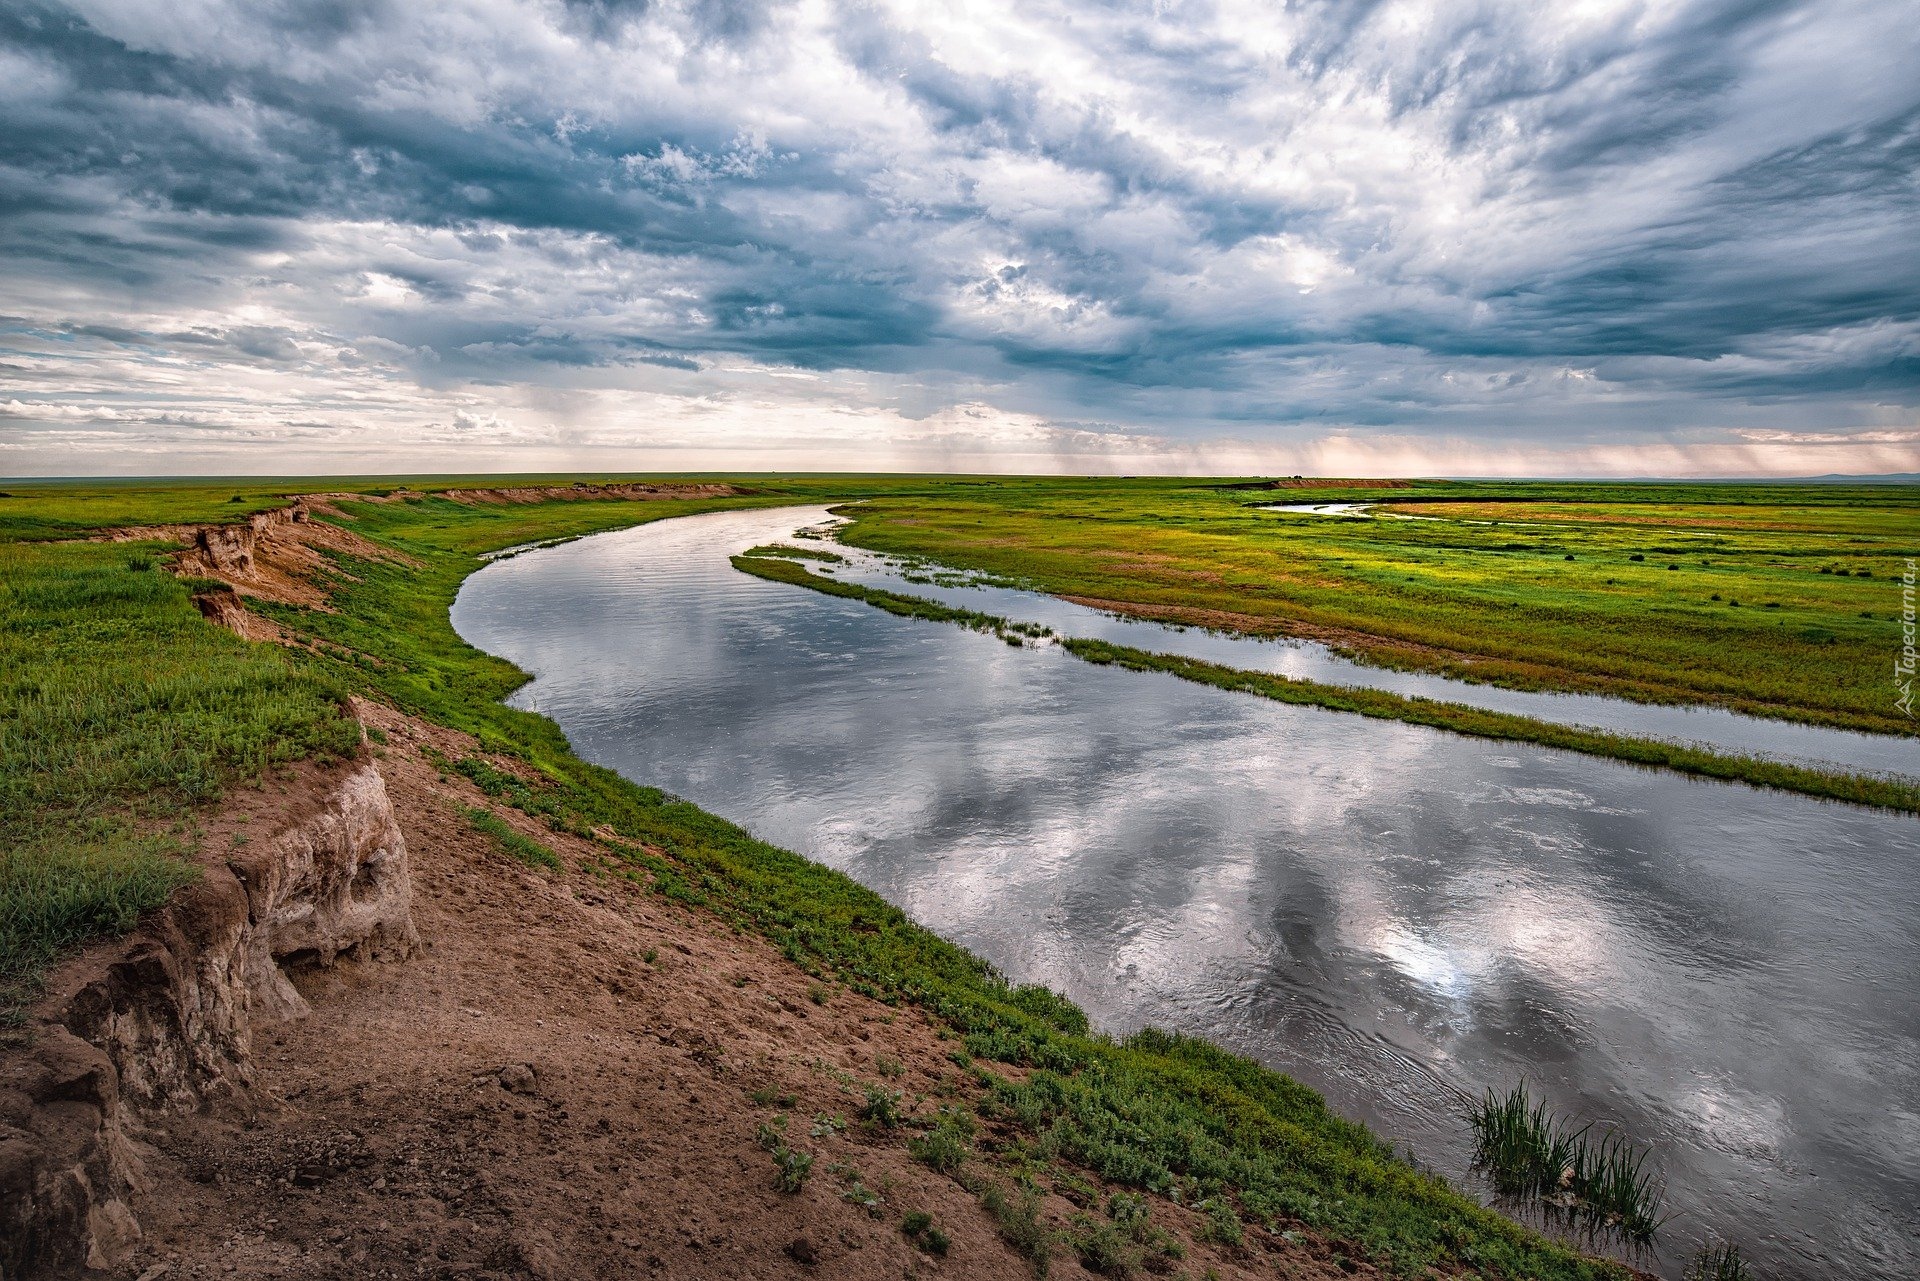 Rzeka Kerulen, Łąki, Niebo, Chmury, Mongolia